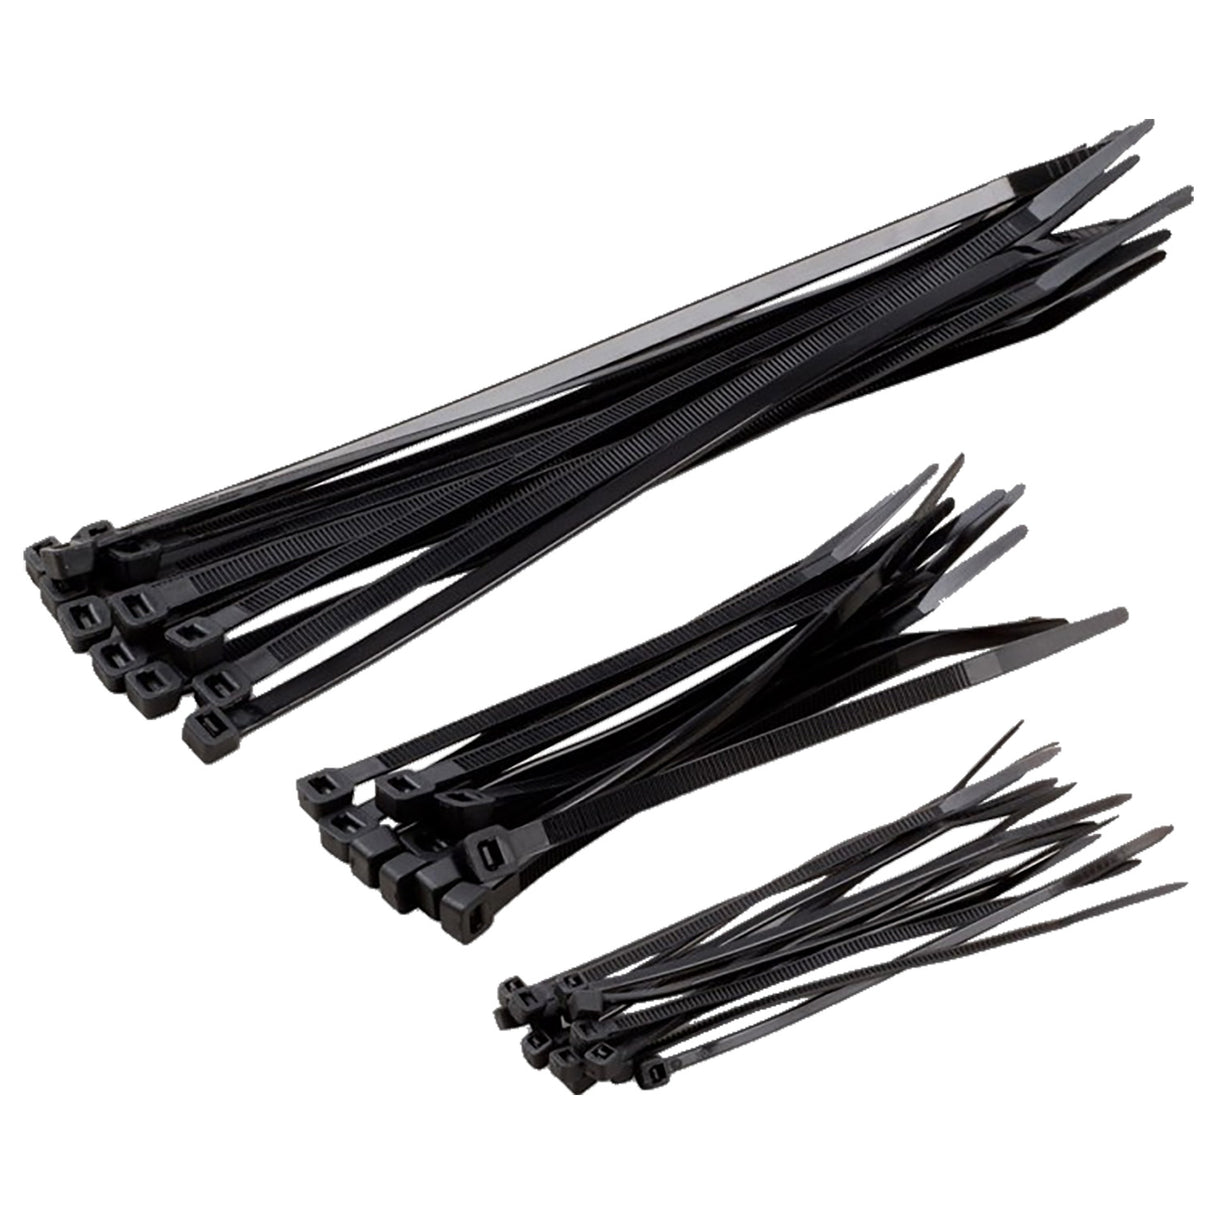 Tiewraps - Cable ties Black